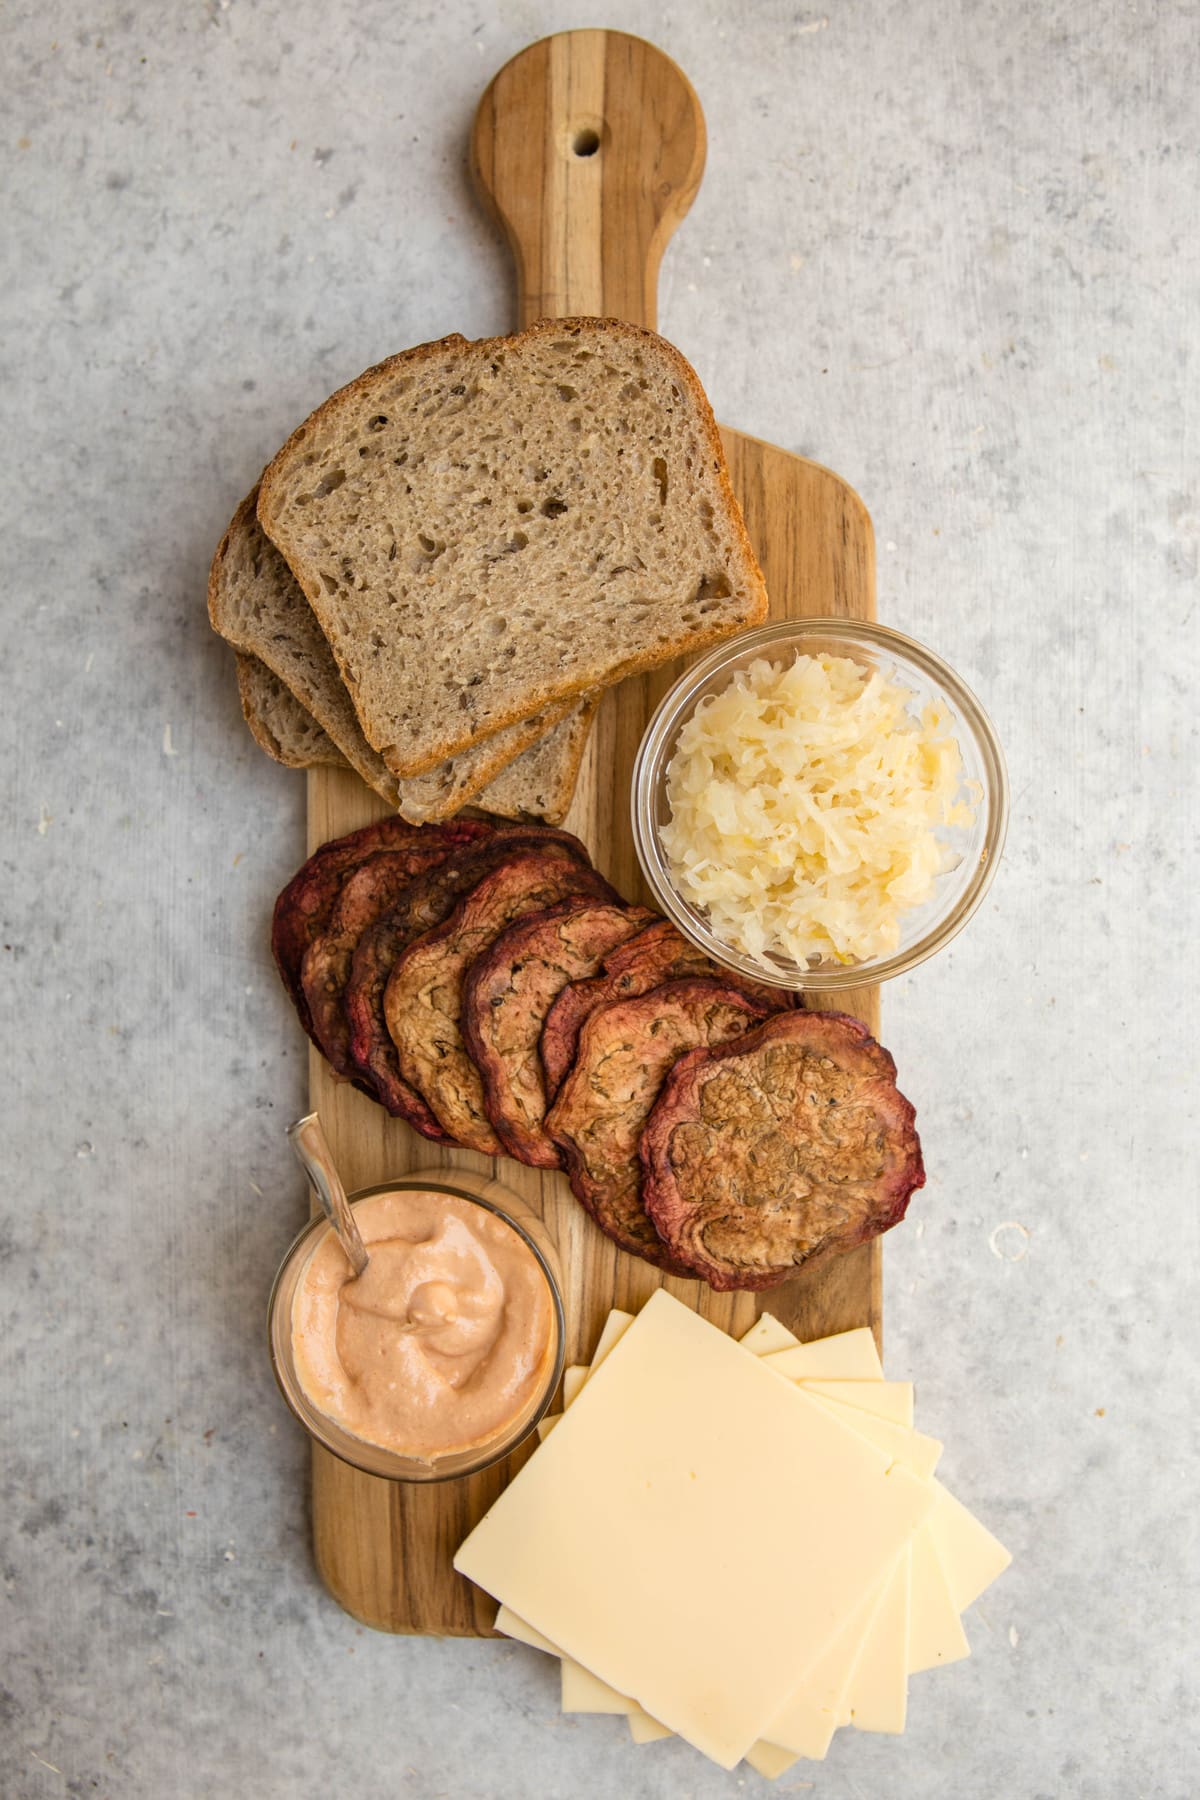 ingredients for vegan reuben sandwich on wood cutting board